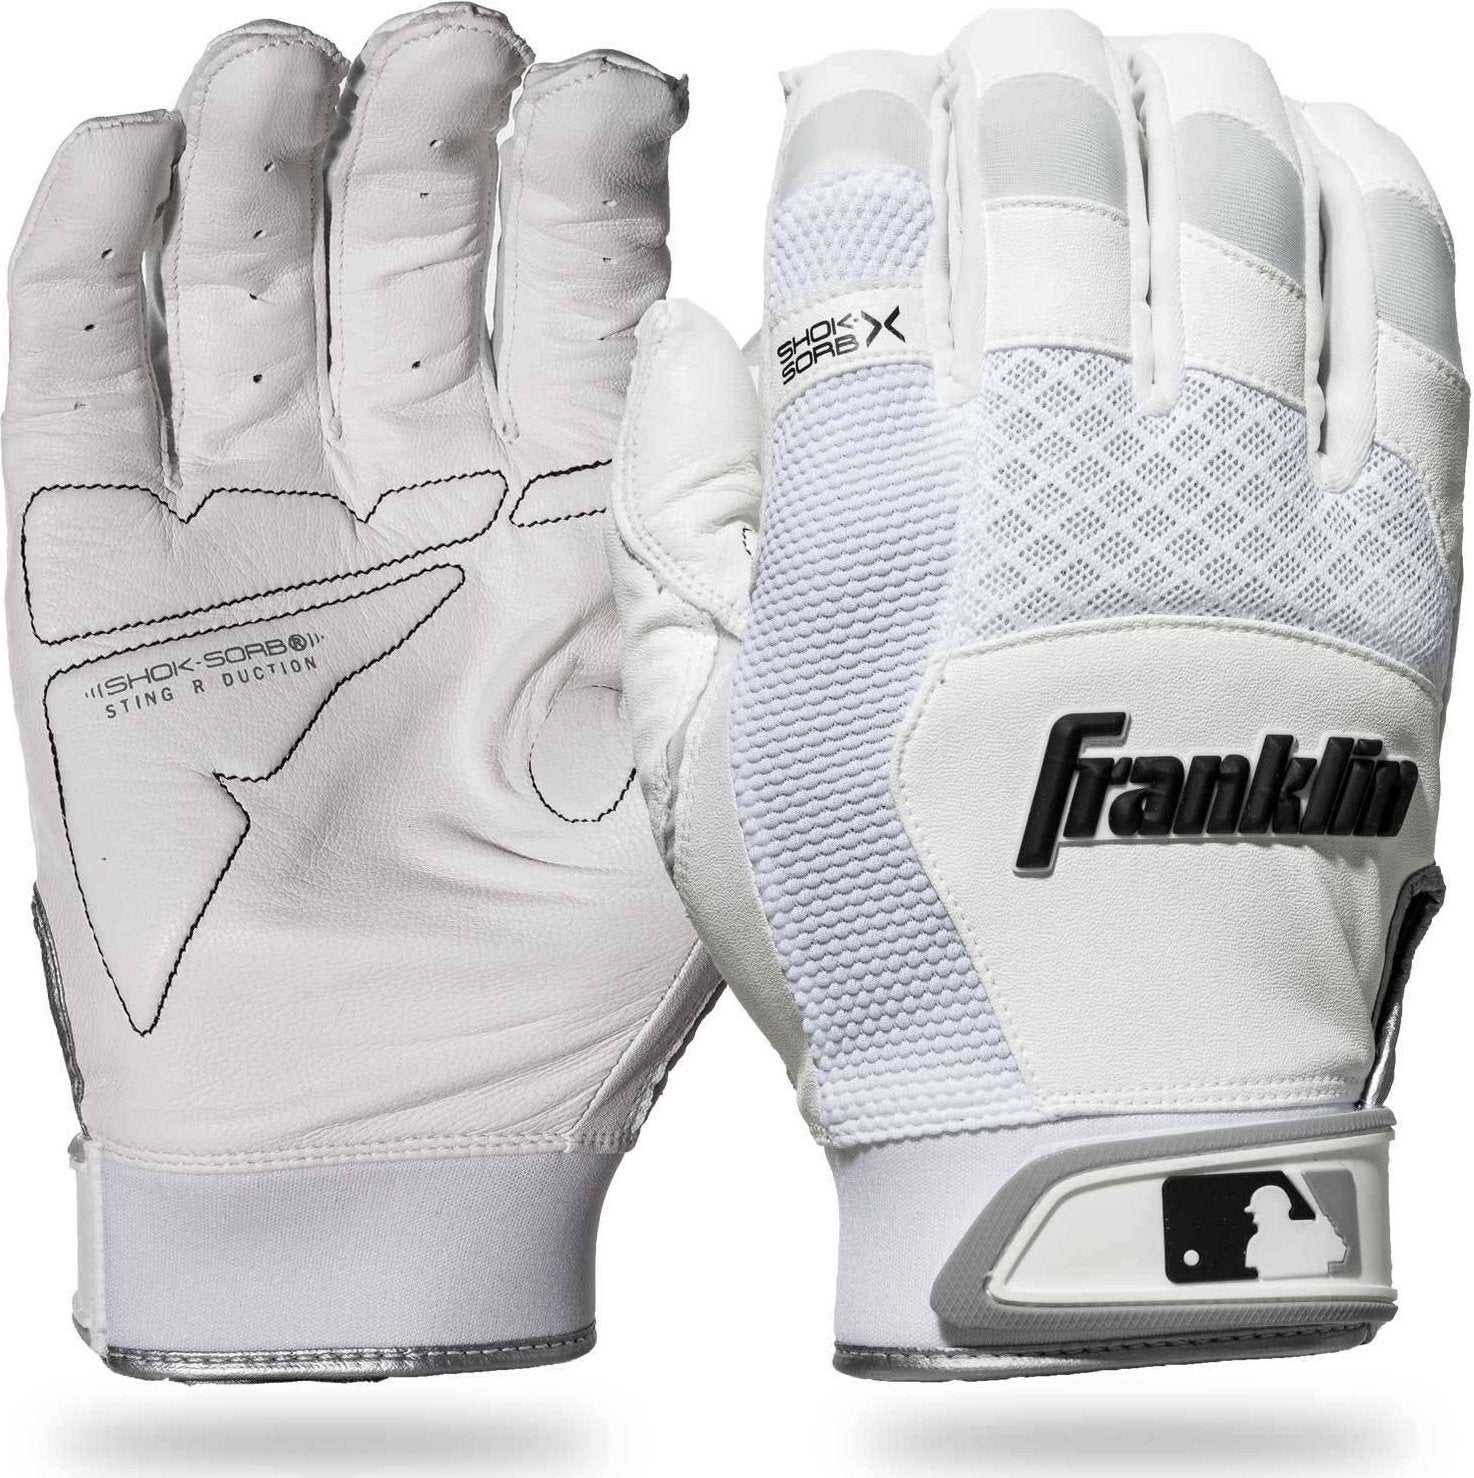 Franklin Shok-Sorb X Adult Batting Gloves - White Chrome - HIT a Double